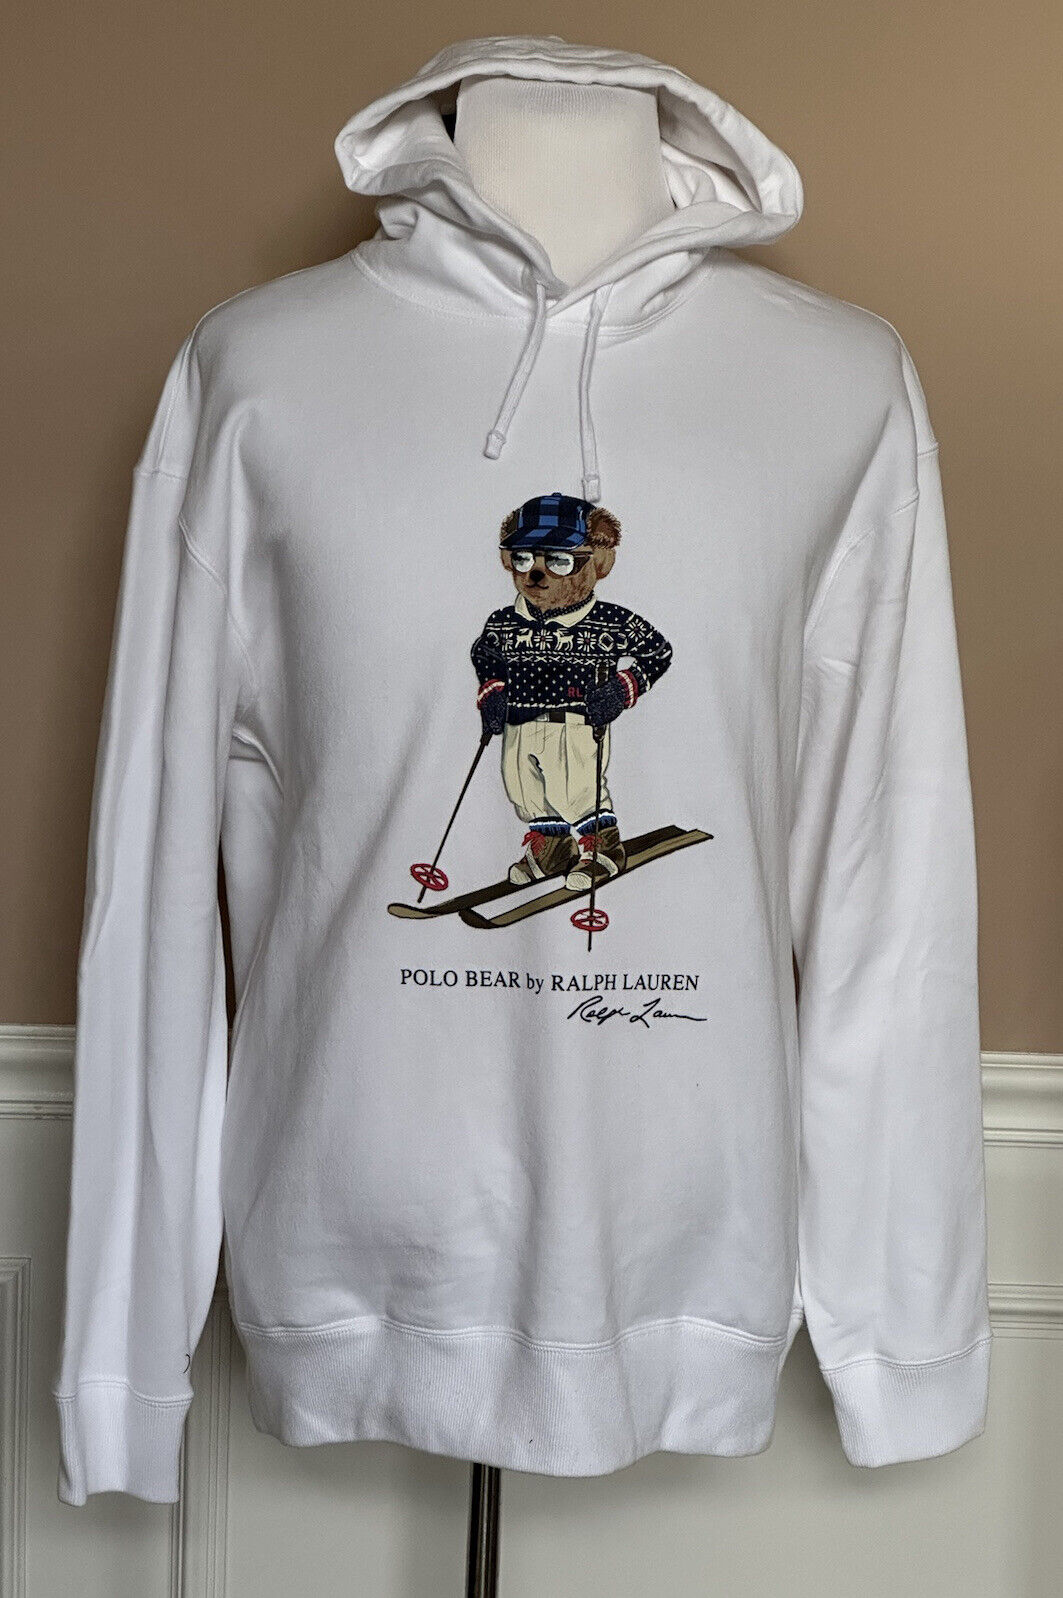 Neu mit Etikett: Polo Ralph Lauren Langarm-Bär-Sweatshirt mit Kapuze, Weiß, 1XB/1TG 